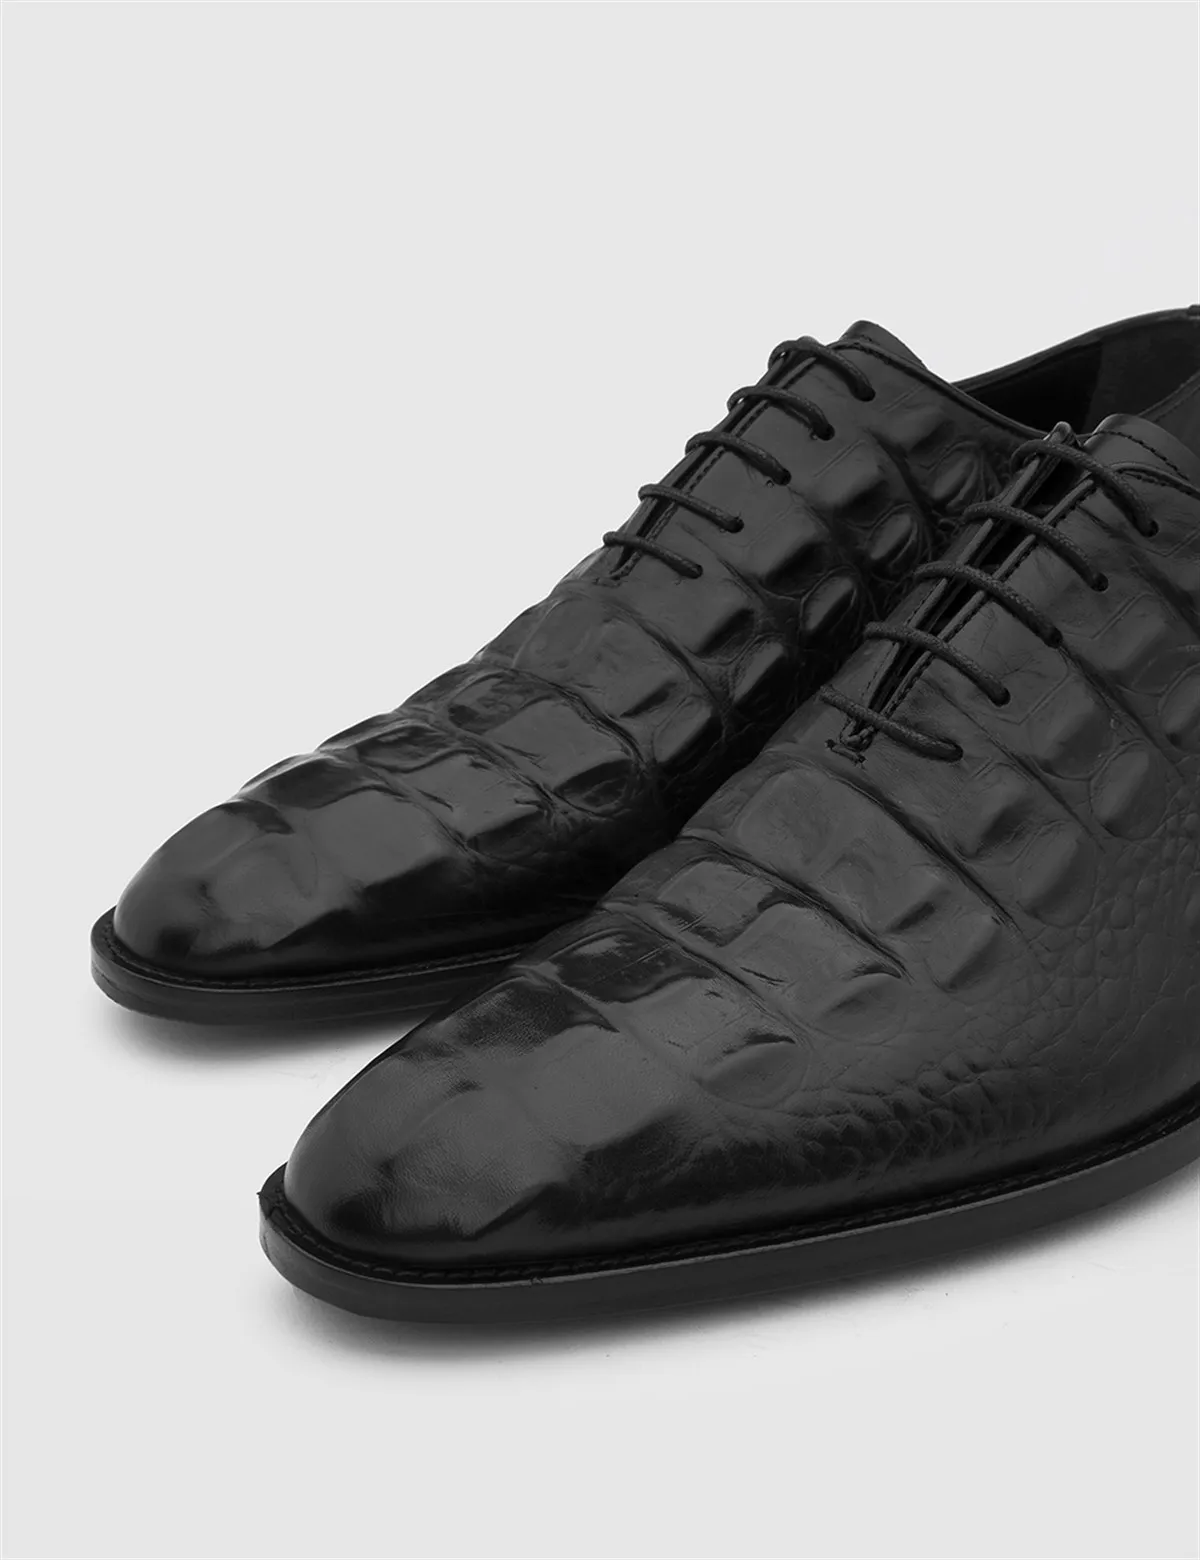 

ILVi-Genuine Leather Handmade Rubus Antique Black Oxford with Crocodile Print Man's Shoes 2022 Fall/Winter